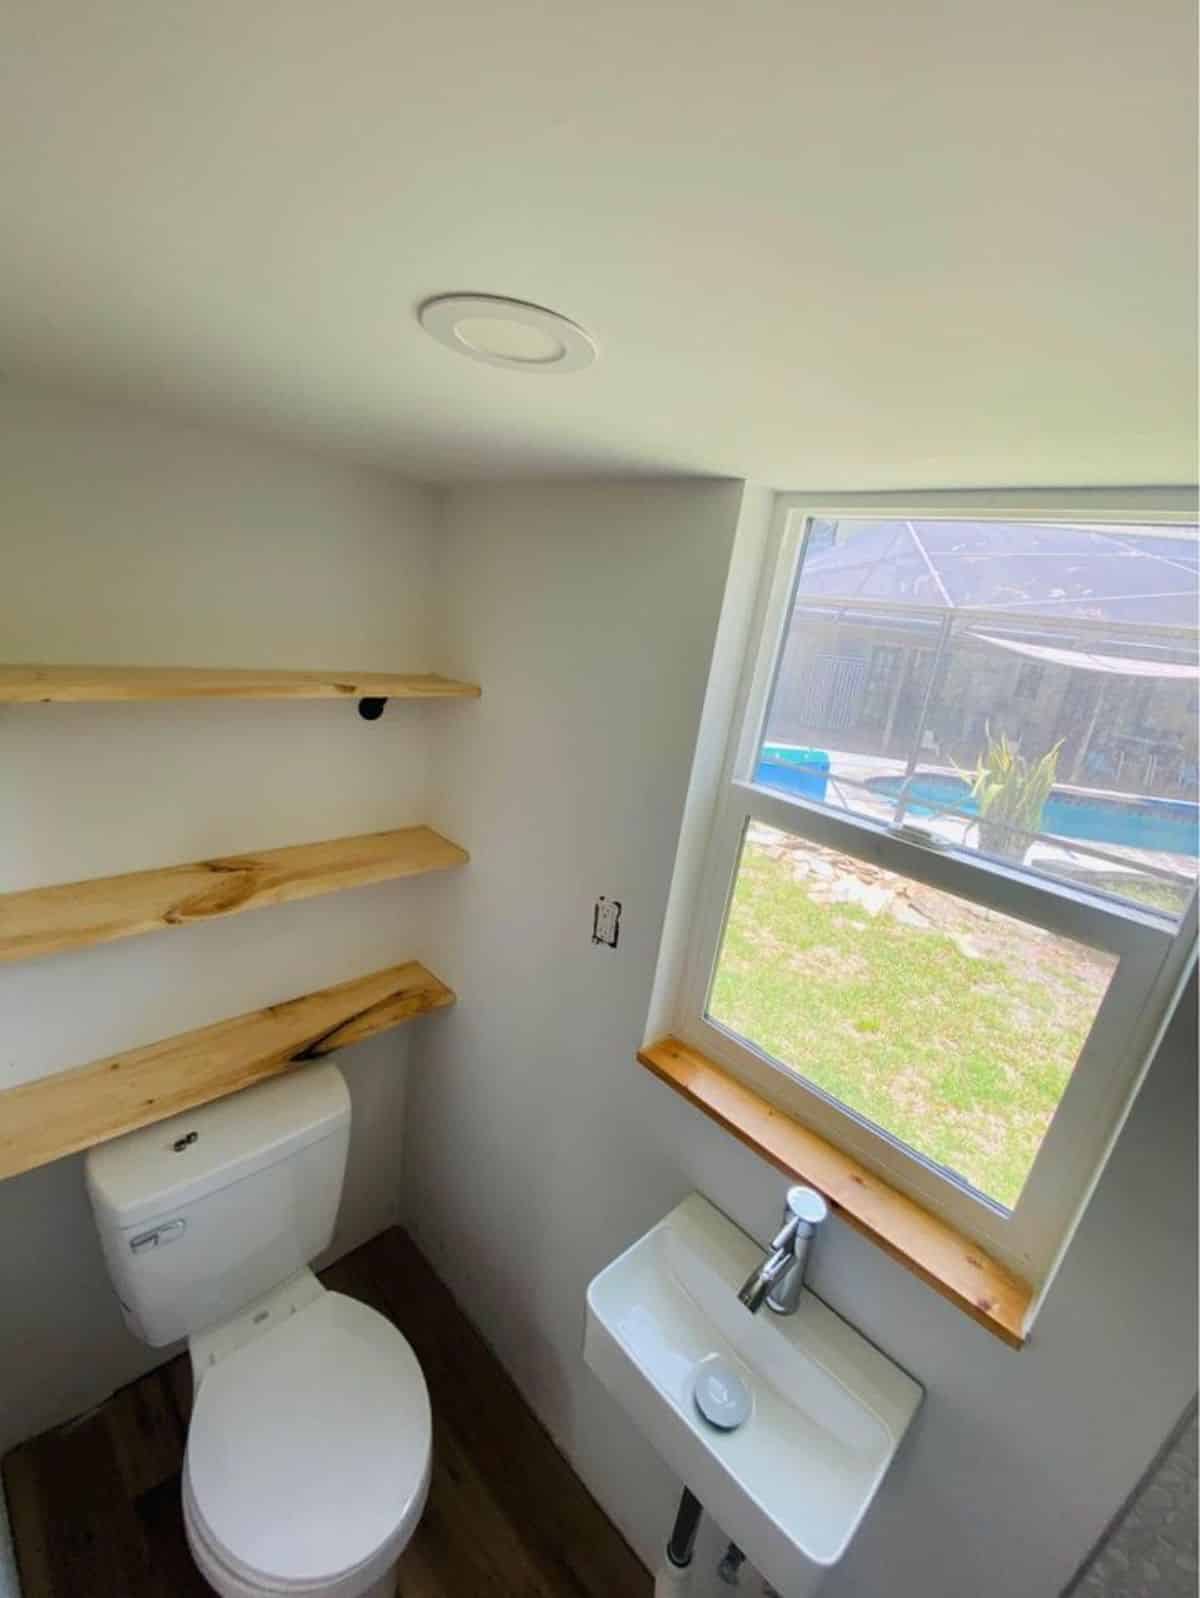 standard toilet and sink installed in bathroom